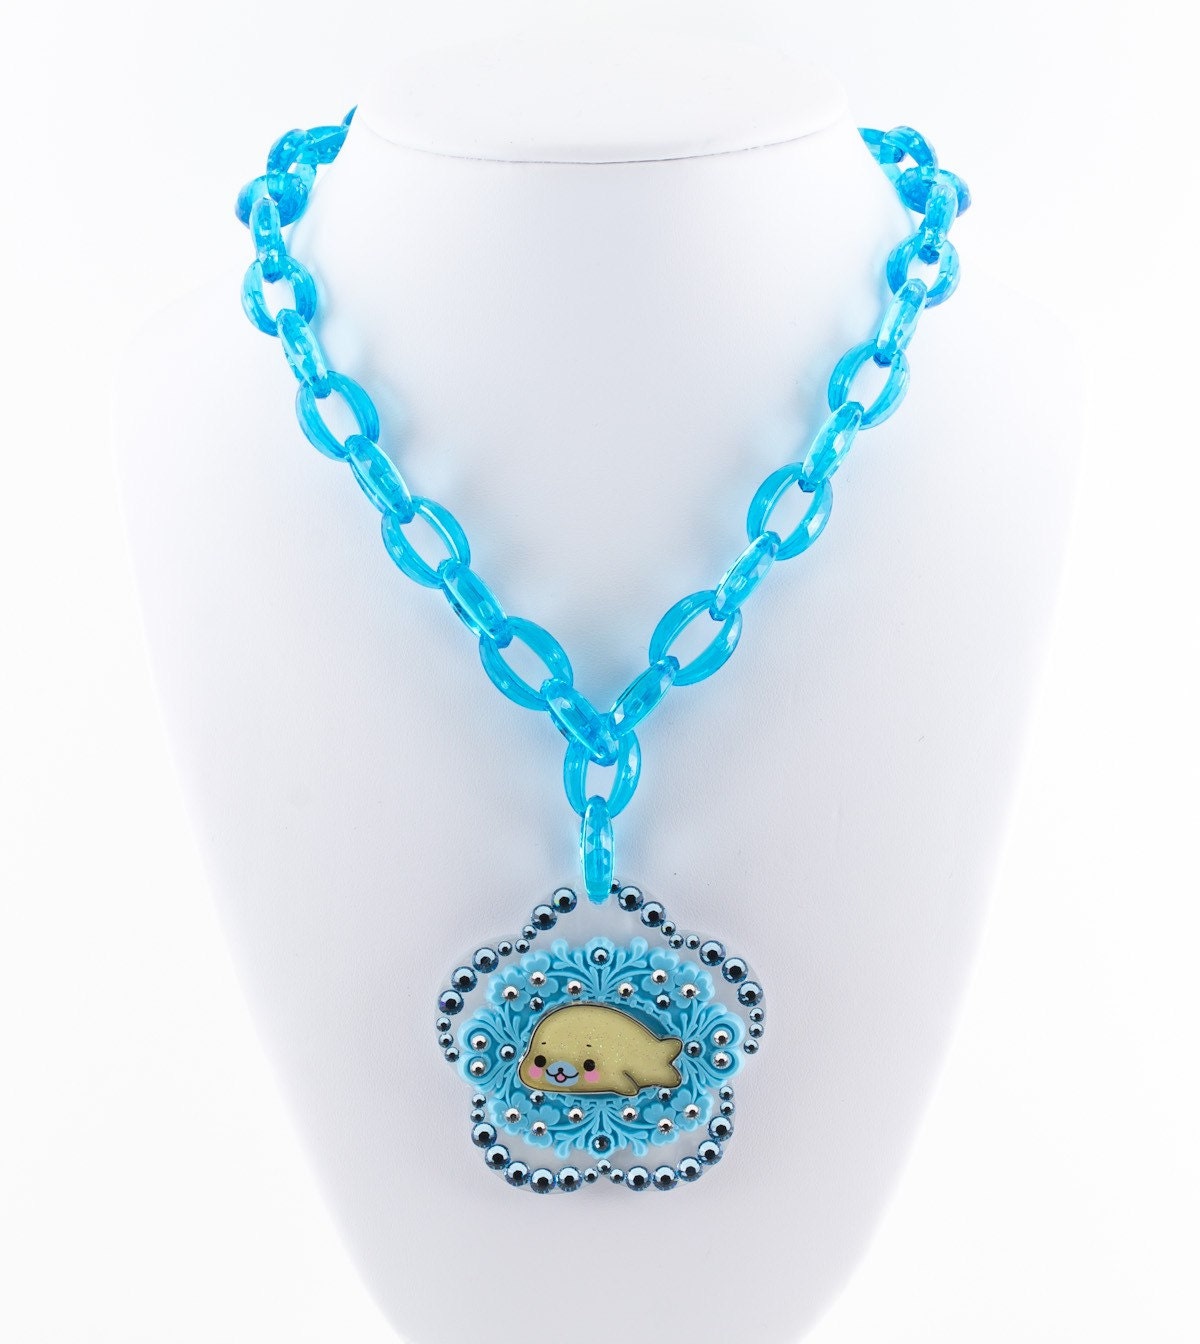 Huge Bling Mamegoma Happy Seal Swarovski Crystal Ornate Flower Pendant on faceted blue vintage chain cute japanese lolita style/inspired